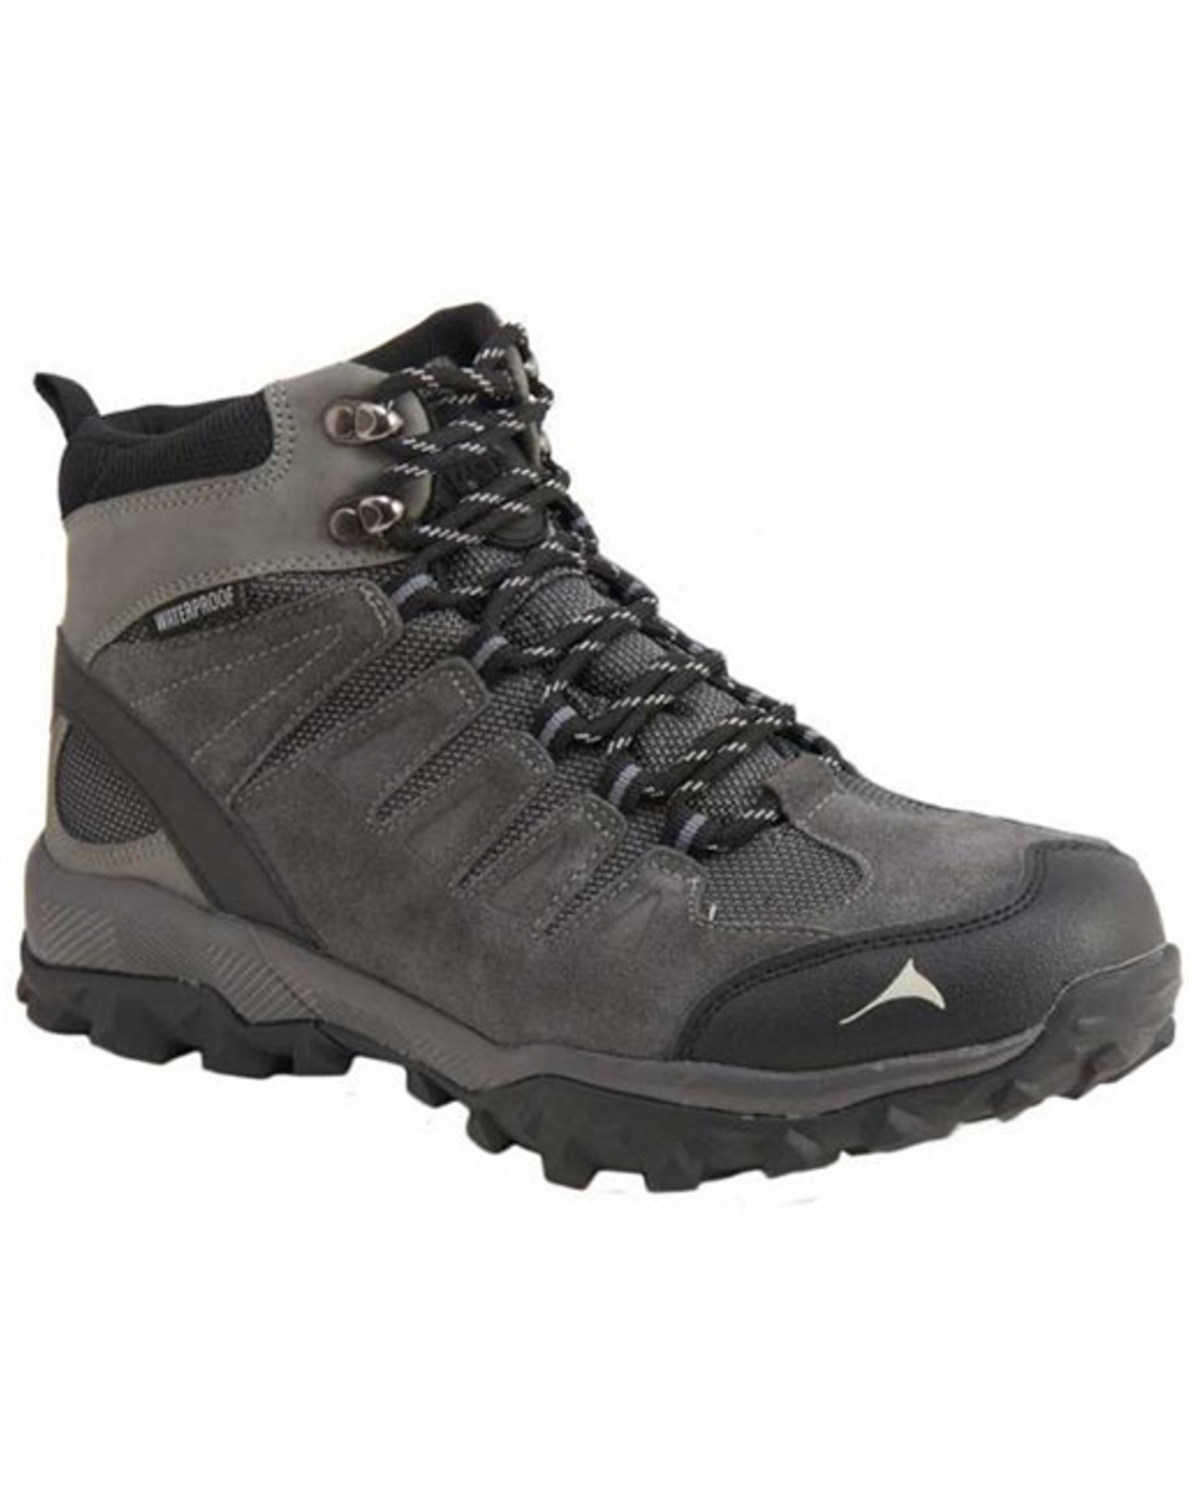 Pacific Mountain Men's Boulder Waterproof Hiking Boots